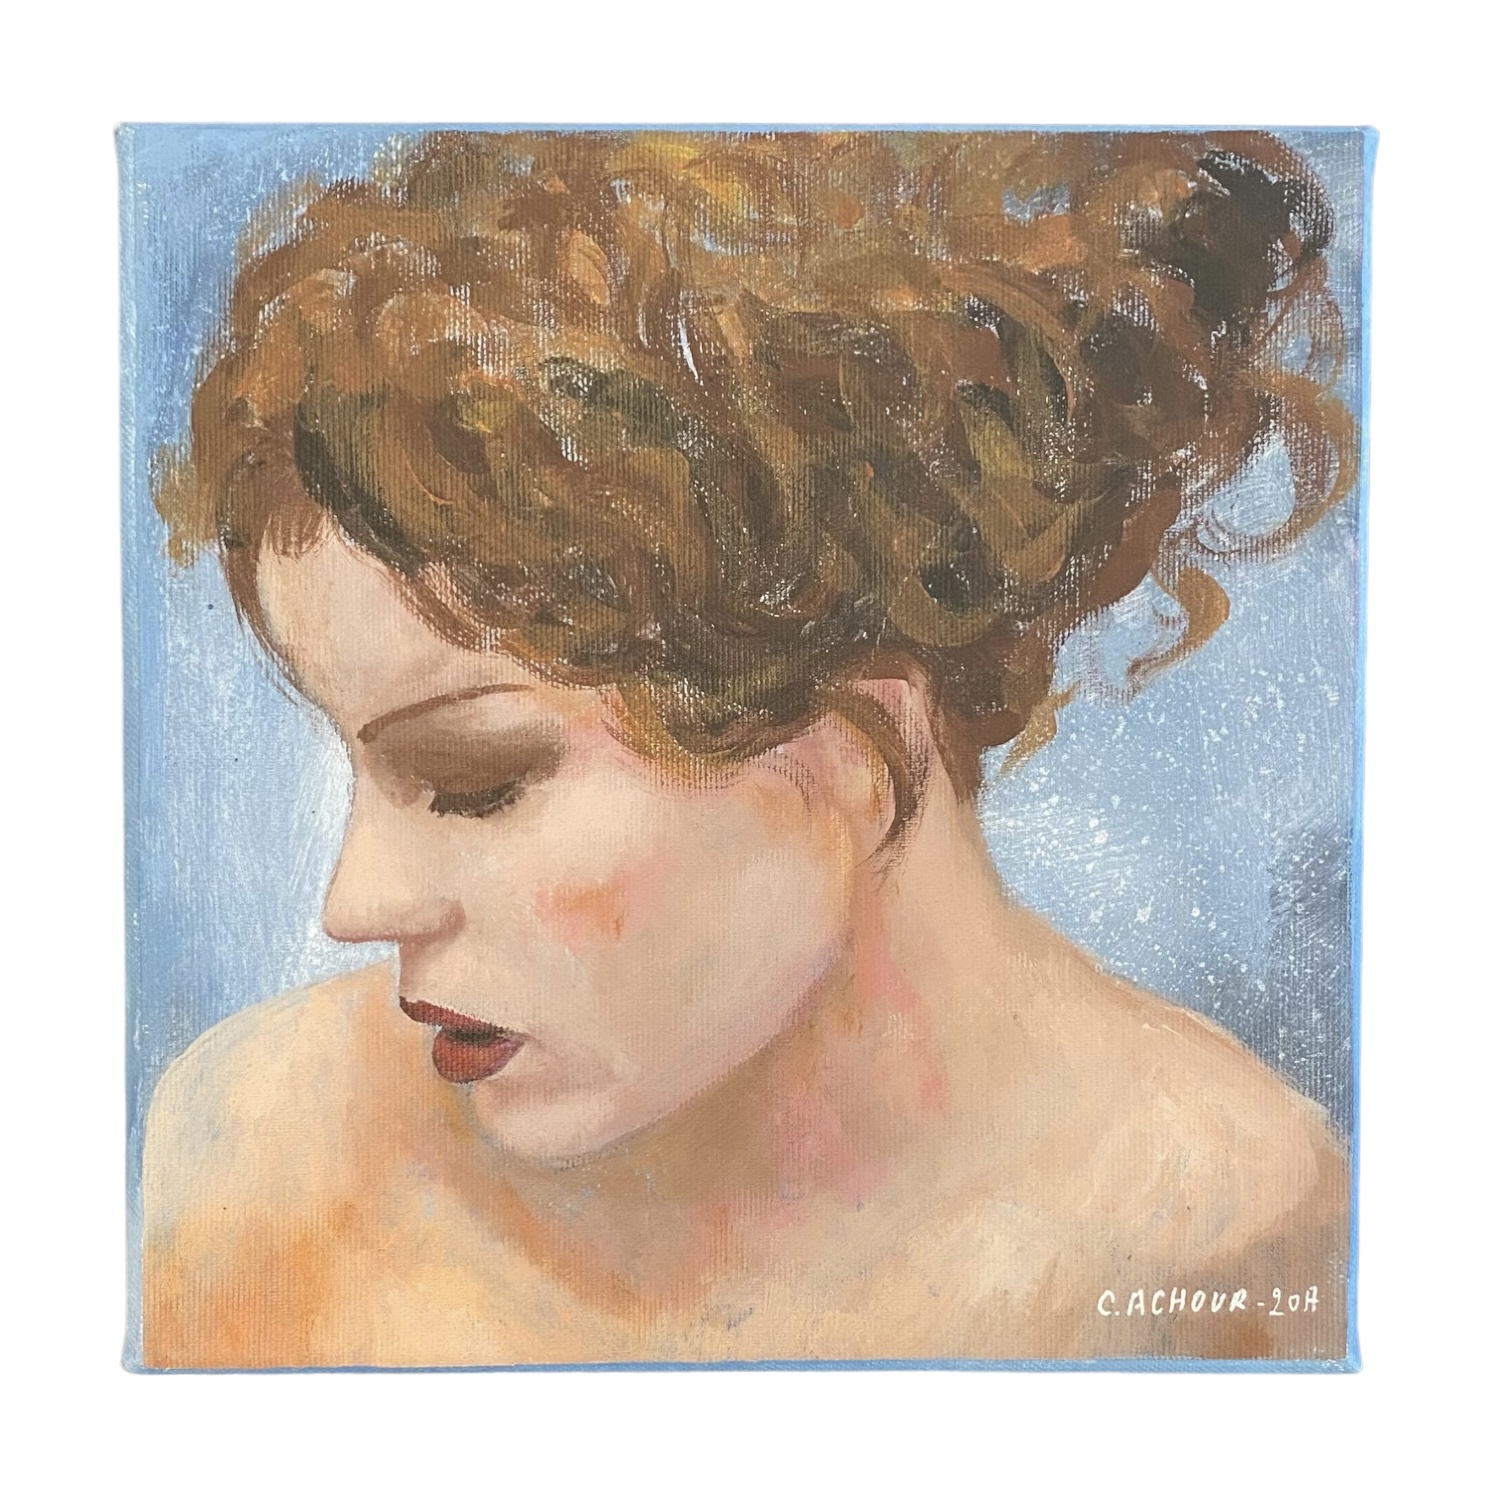 Céline Achour, Fatale Marion, 25x25 cm, Acrylic on canvas, 2017